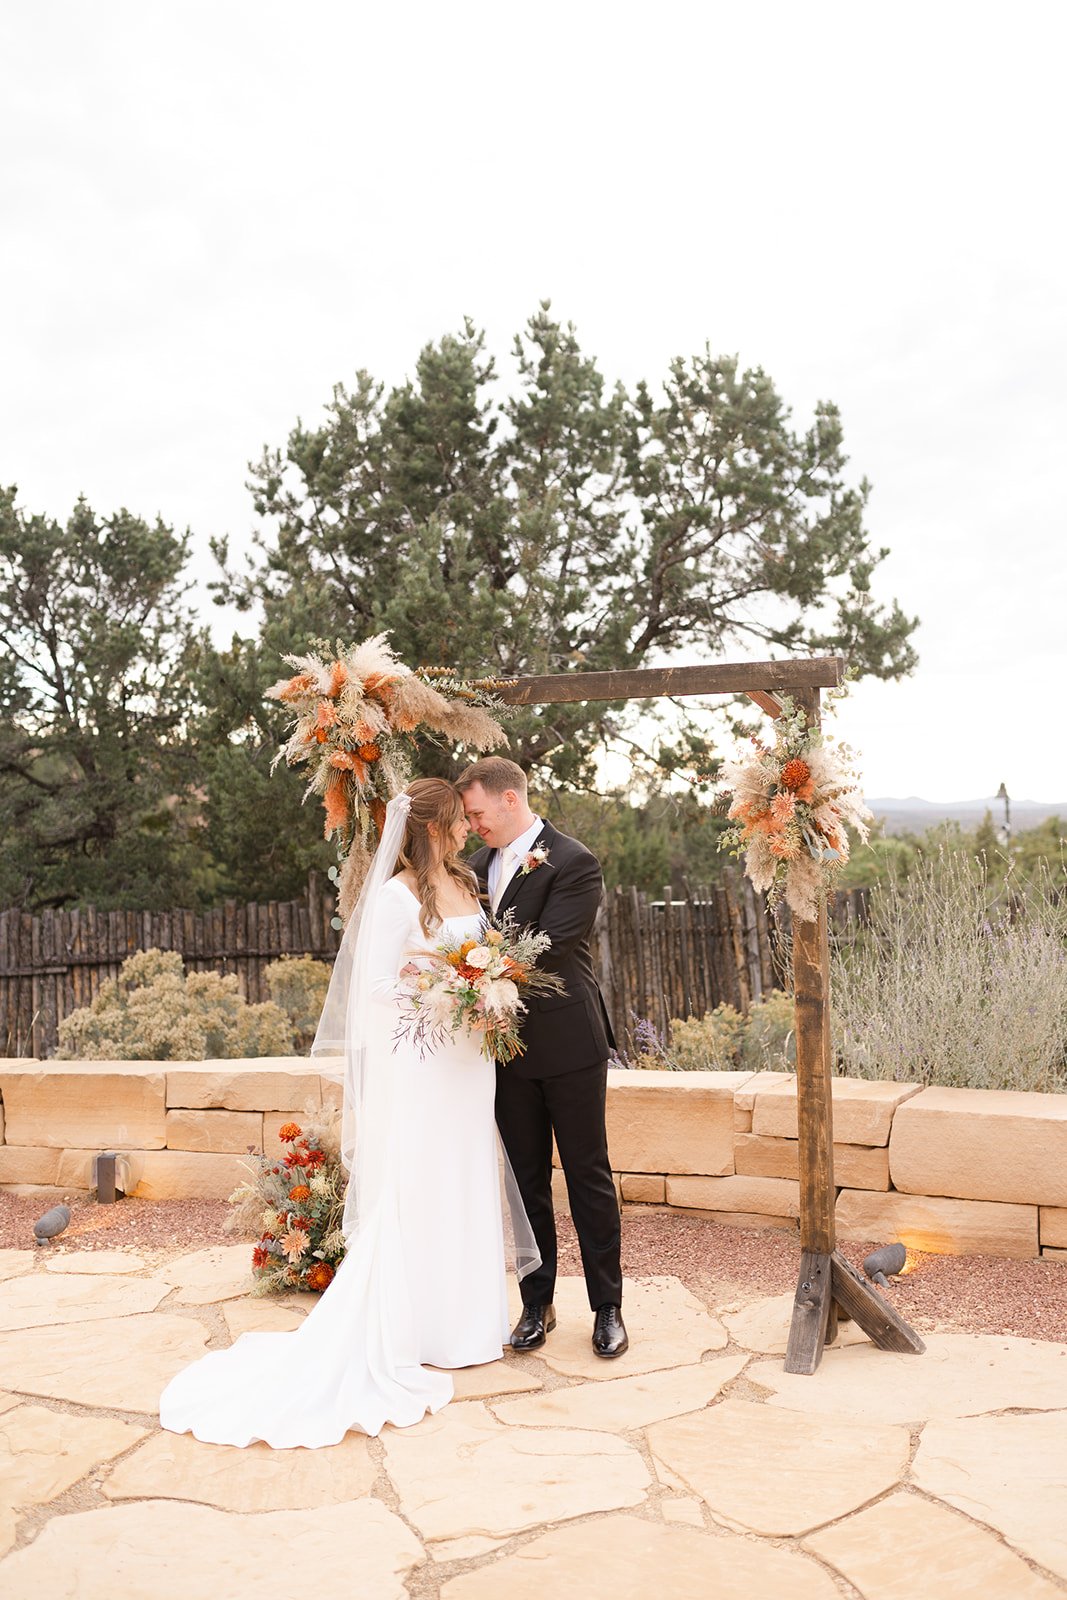 Artichokes & Pomegranates bridal bouquet, wedding ceremony flowers and arch in Santa Fe